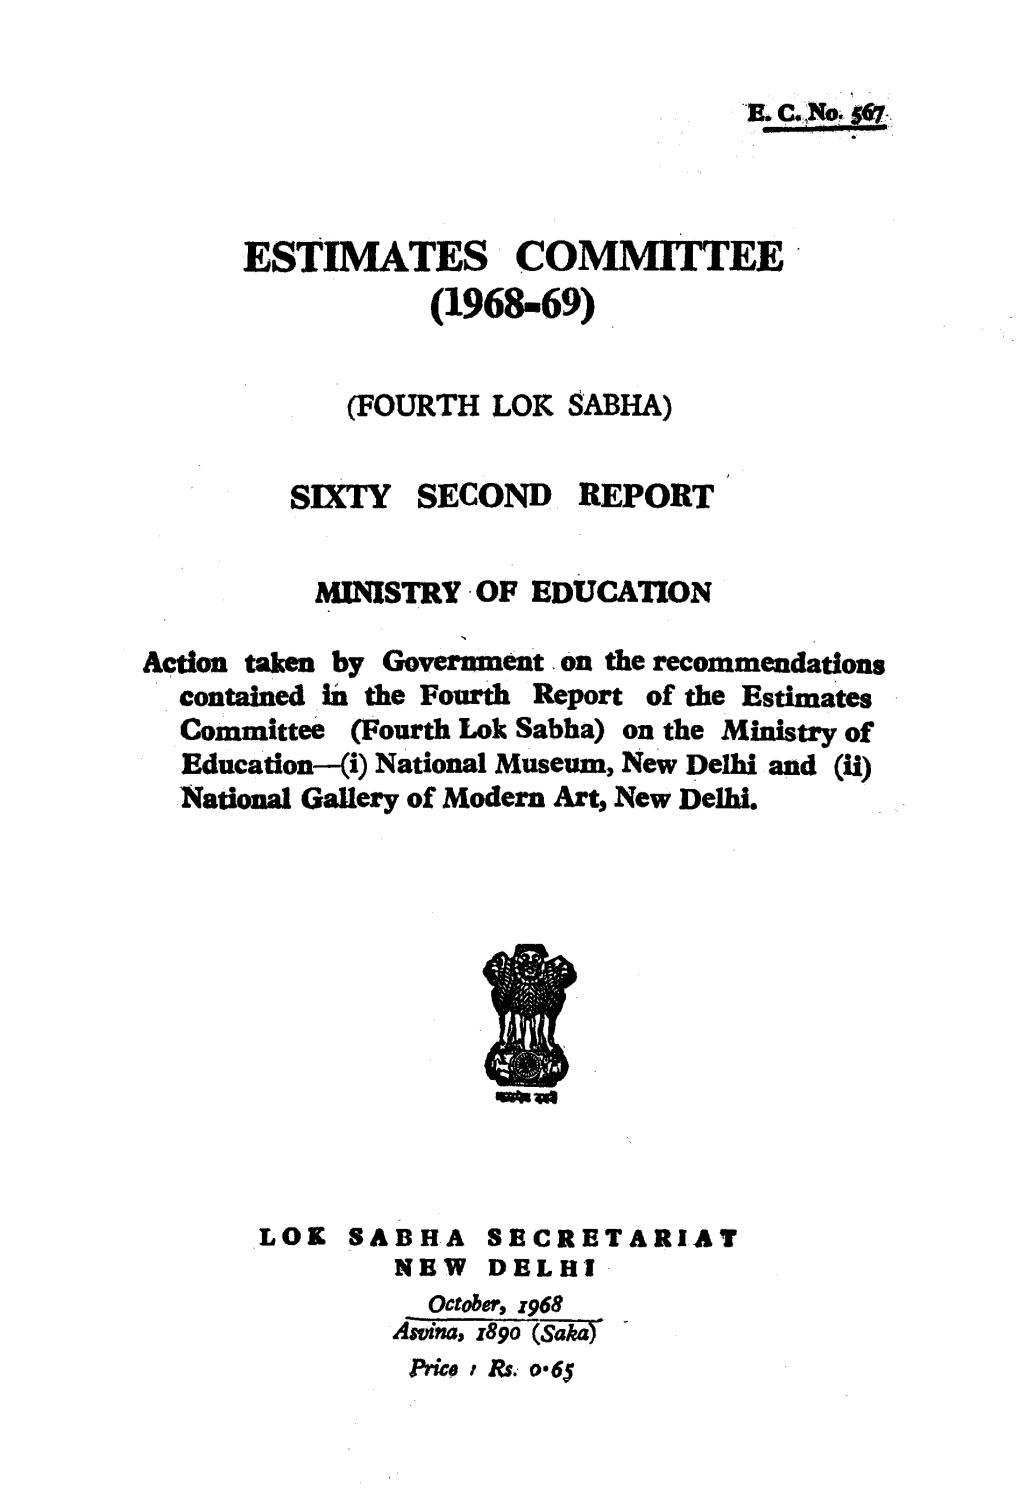 Estimates Committee (1968-69)